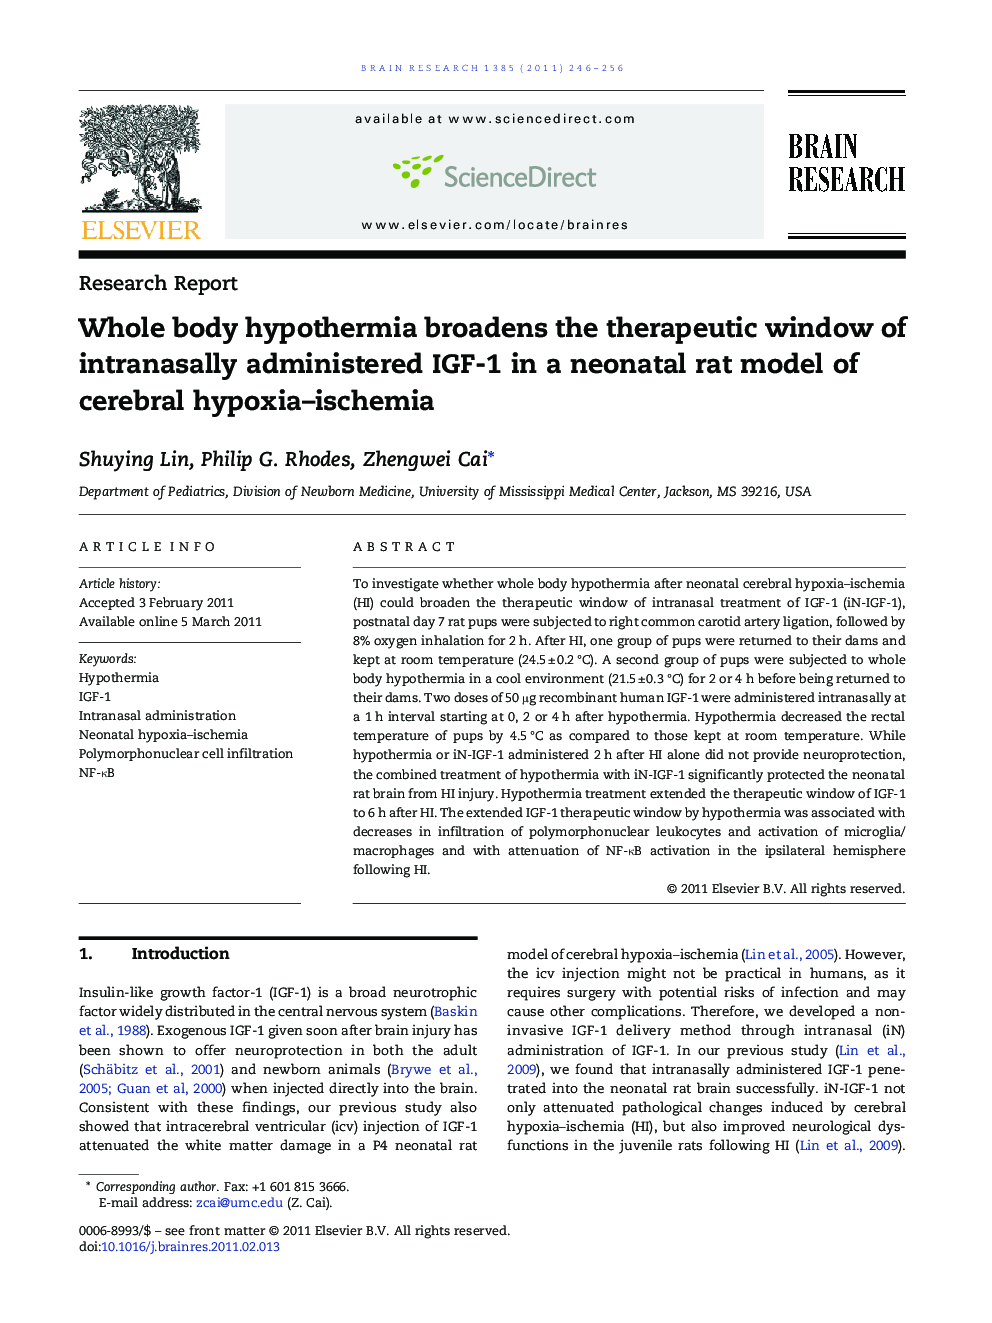 Research ReportWhole body hypothermia broadens the therapeutic window of intranasally administered IGF-1 in a neonatal rat model of cerebral hypoxia-ischemia